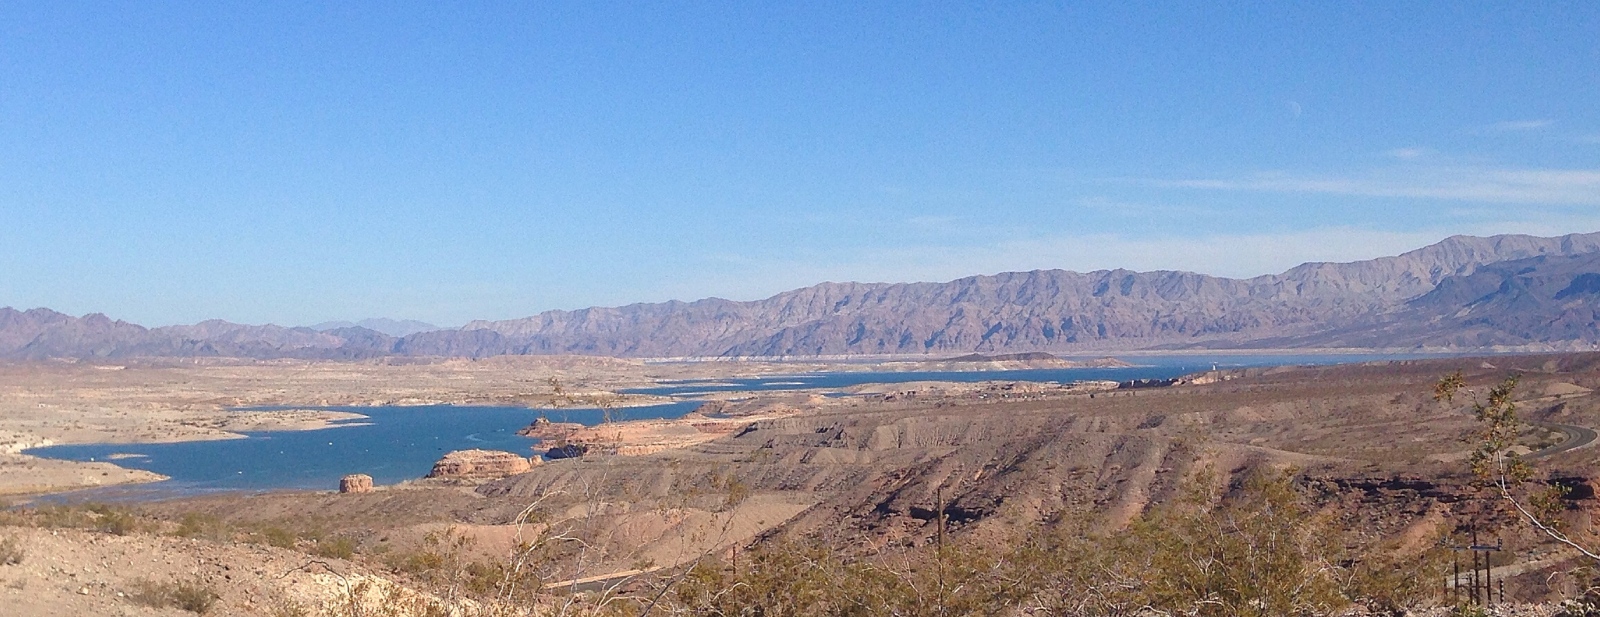 Vista of Lake Mead